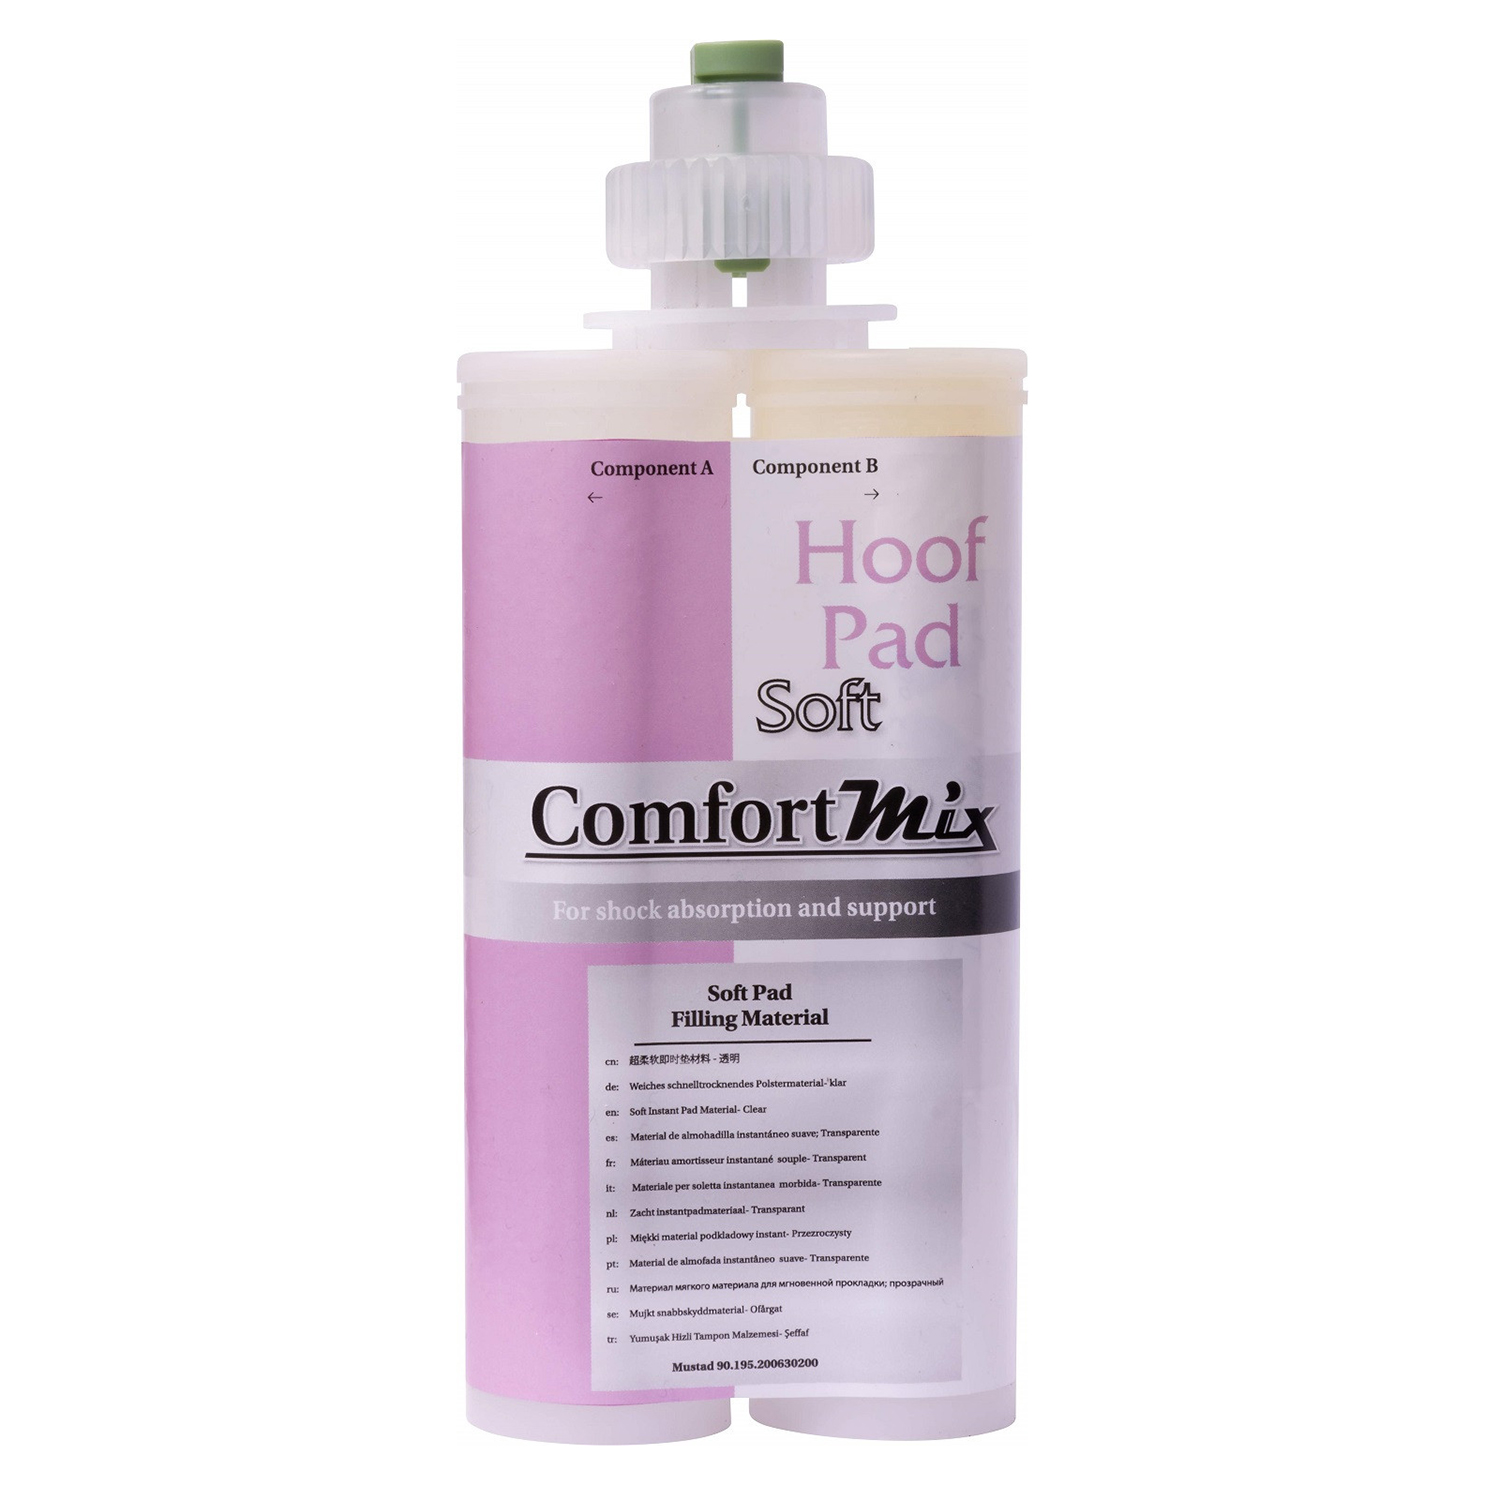 Hoofpad soft comfort mix